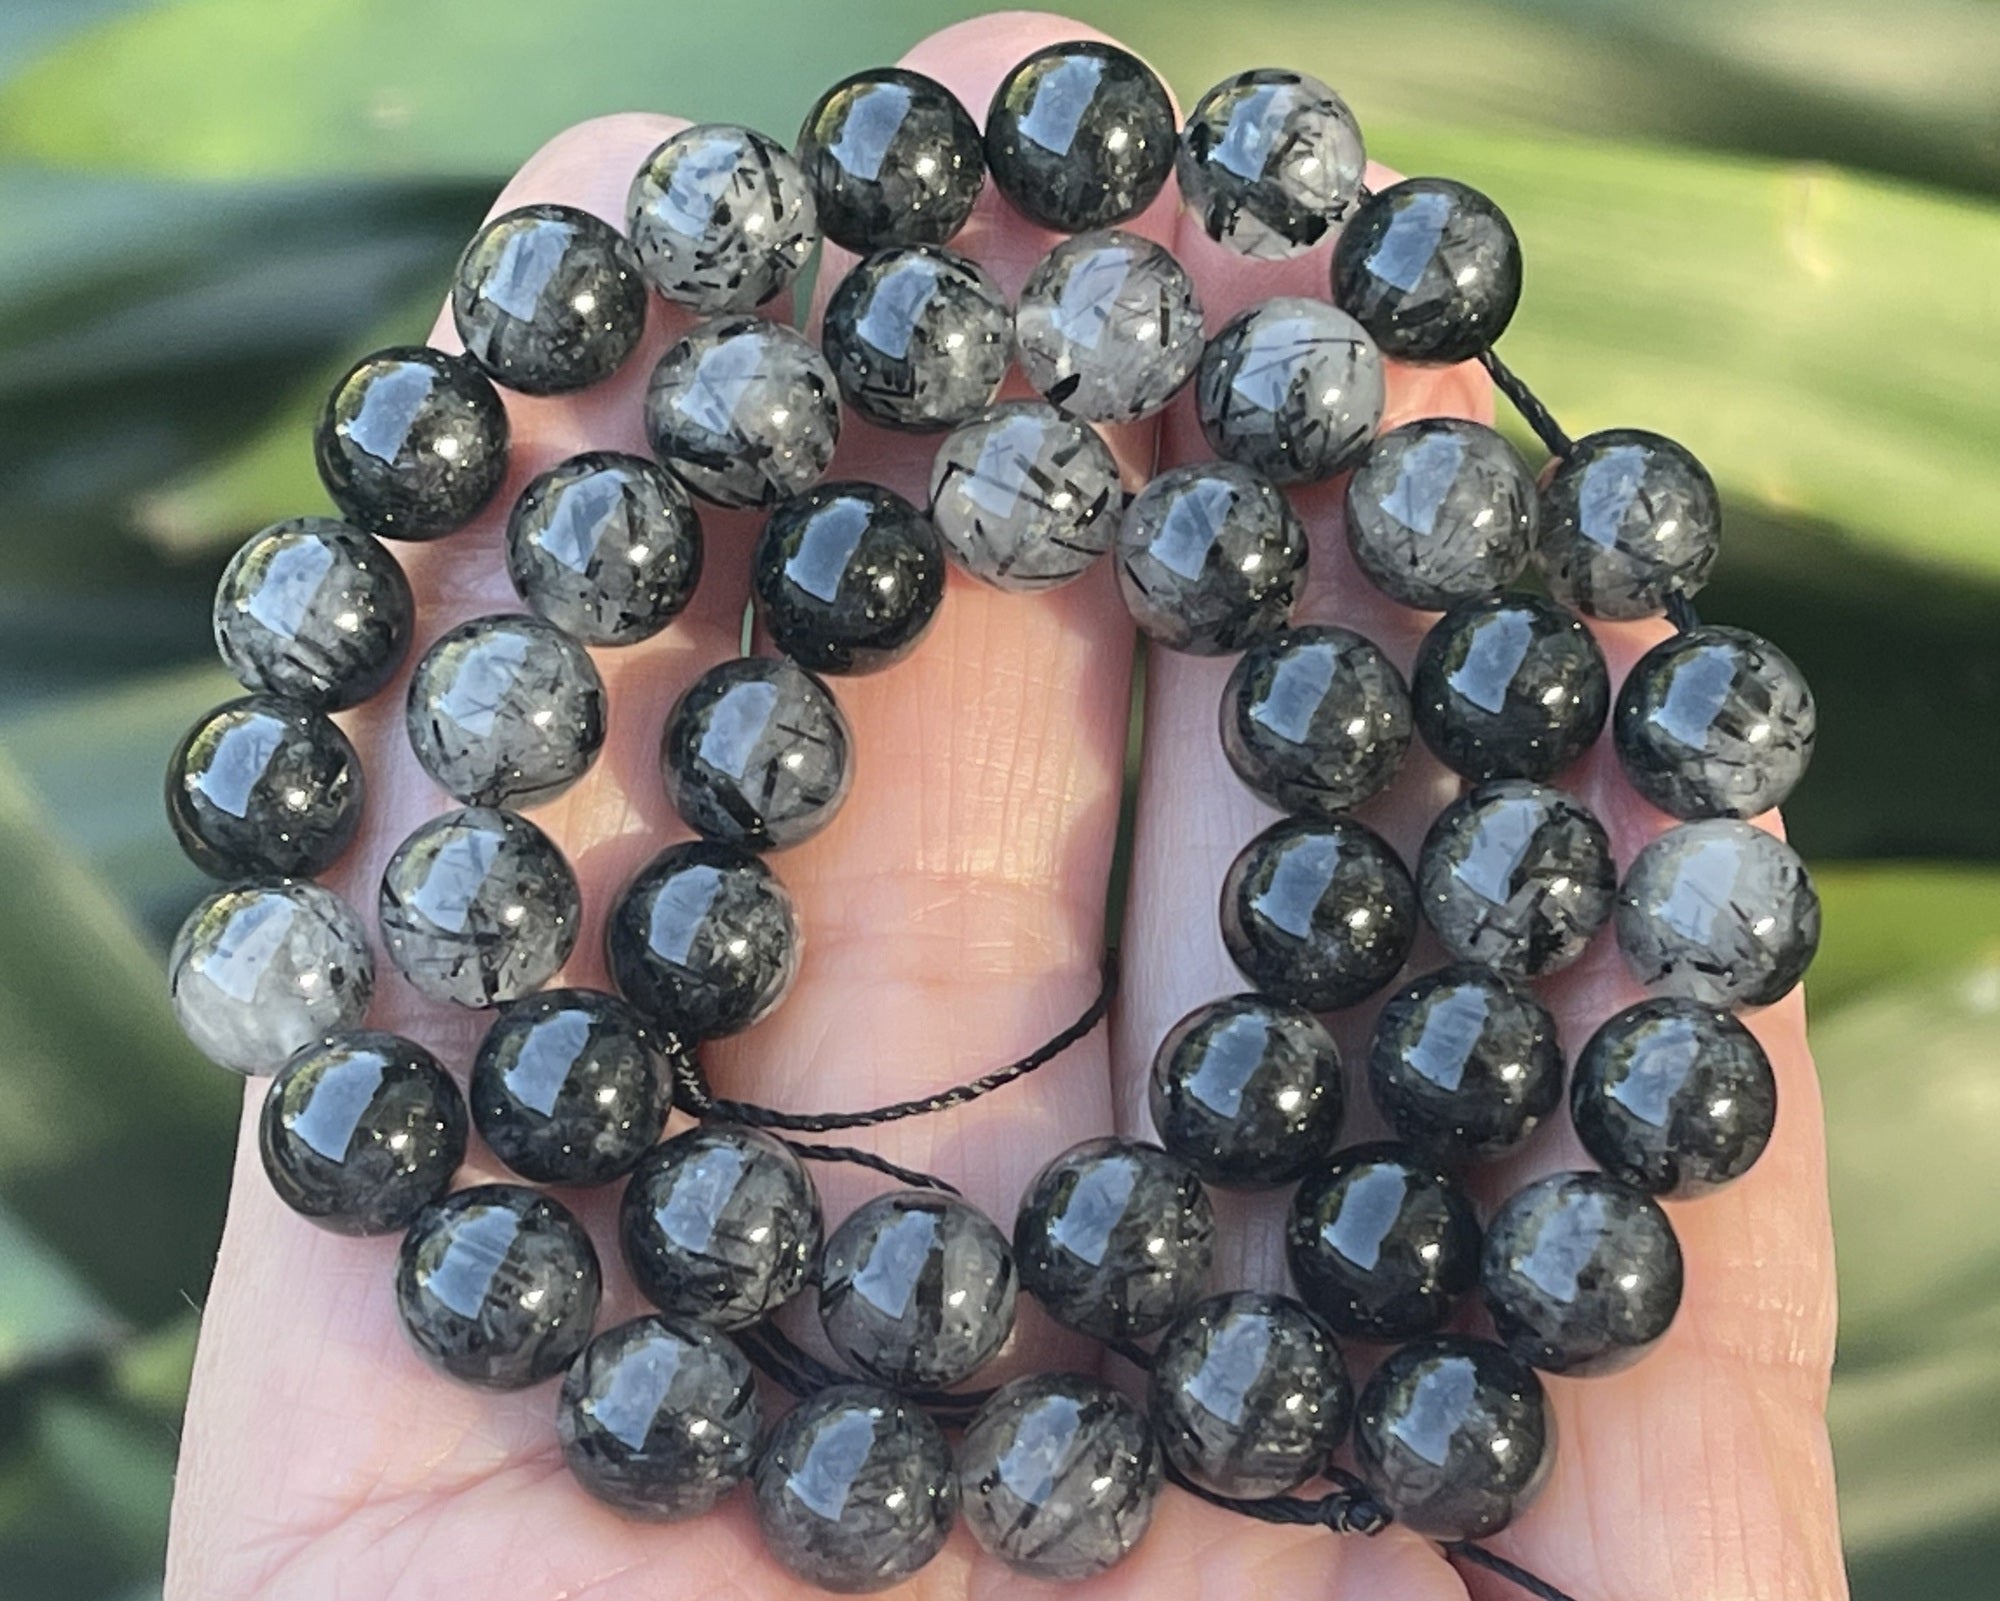 Black Tourmaline Rutilated Quartz 8mm round natural gemstone beads 15.5" strand